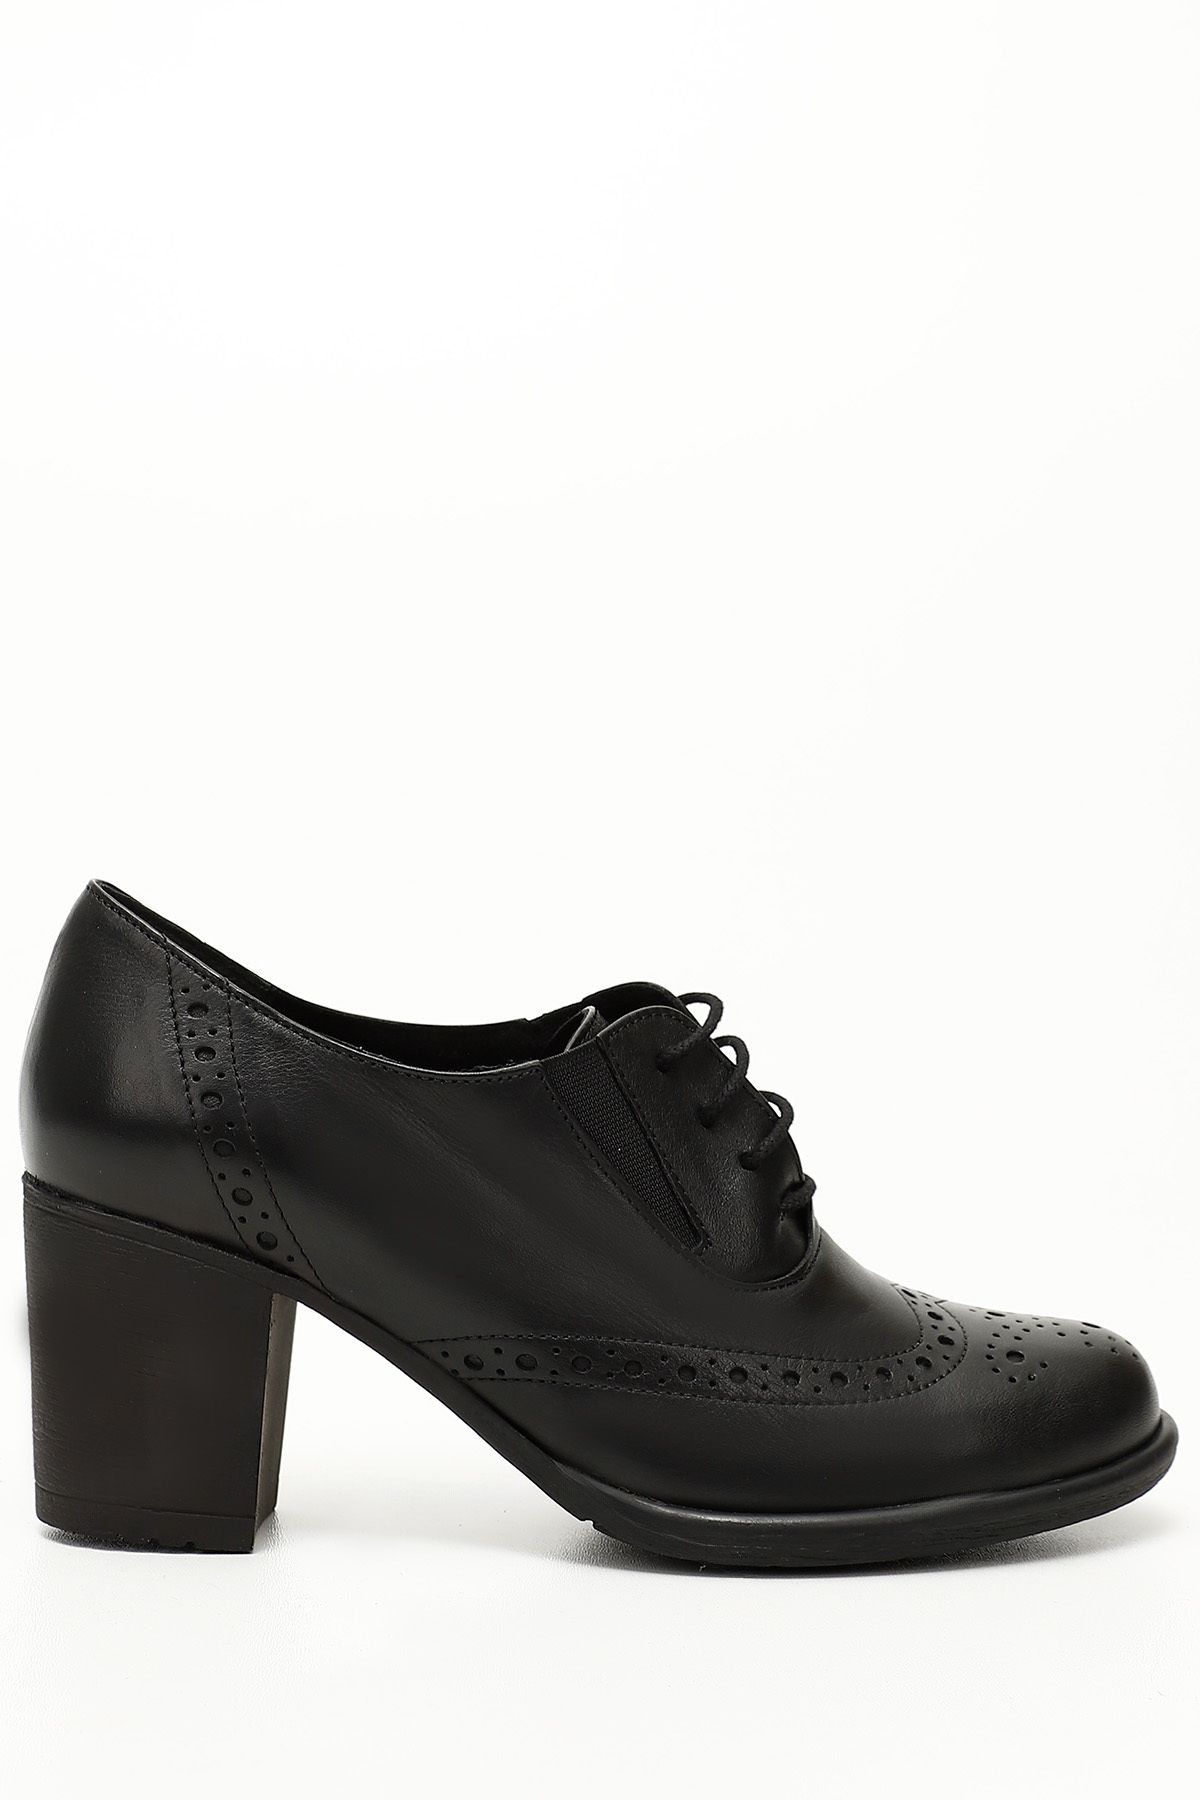 Sioux Stylish Black Brogue Shoes | Cinderella Shoes